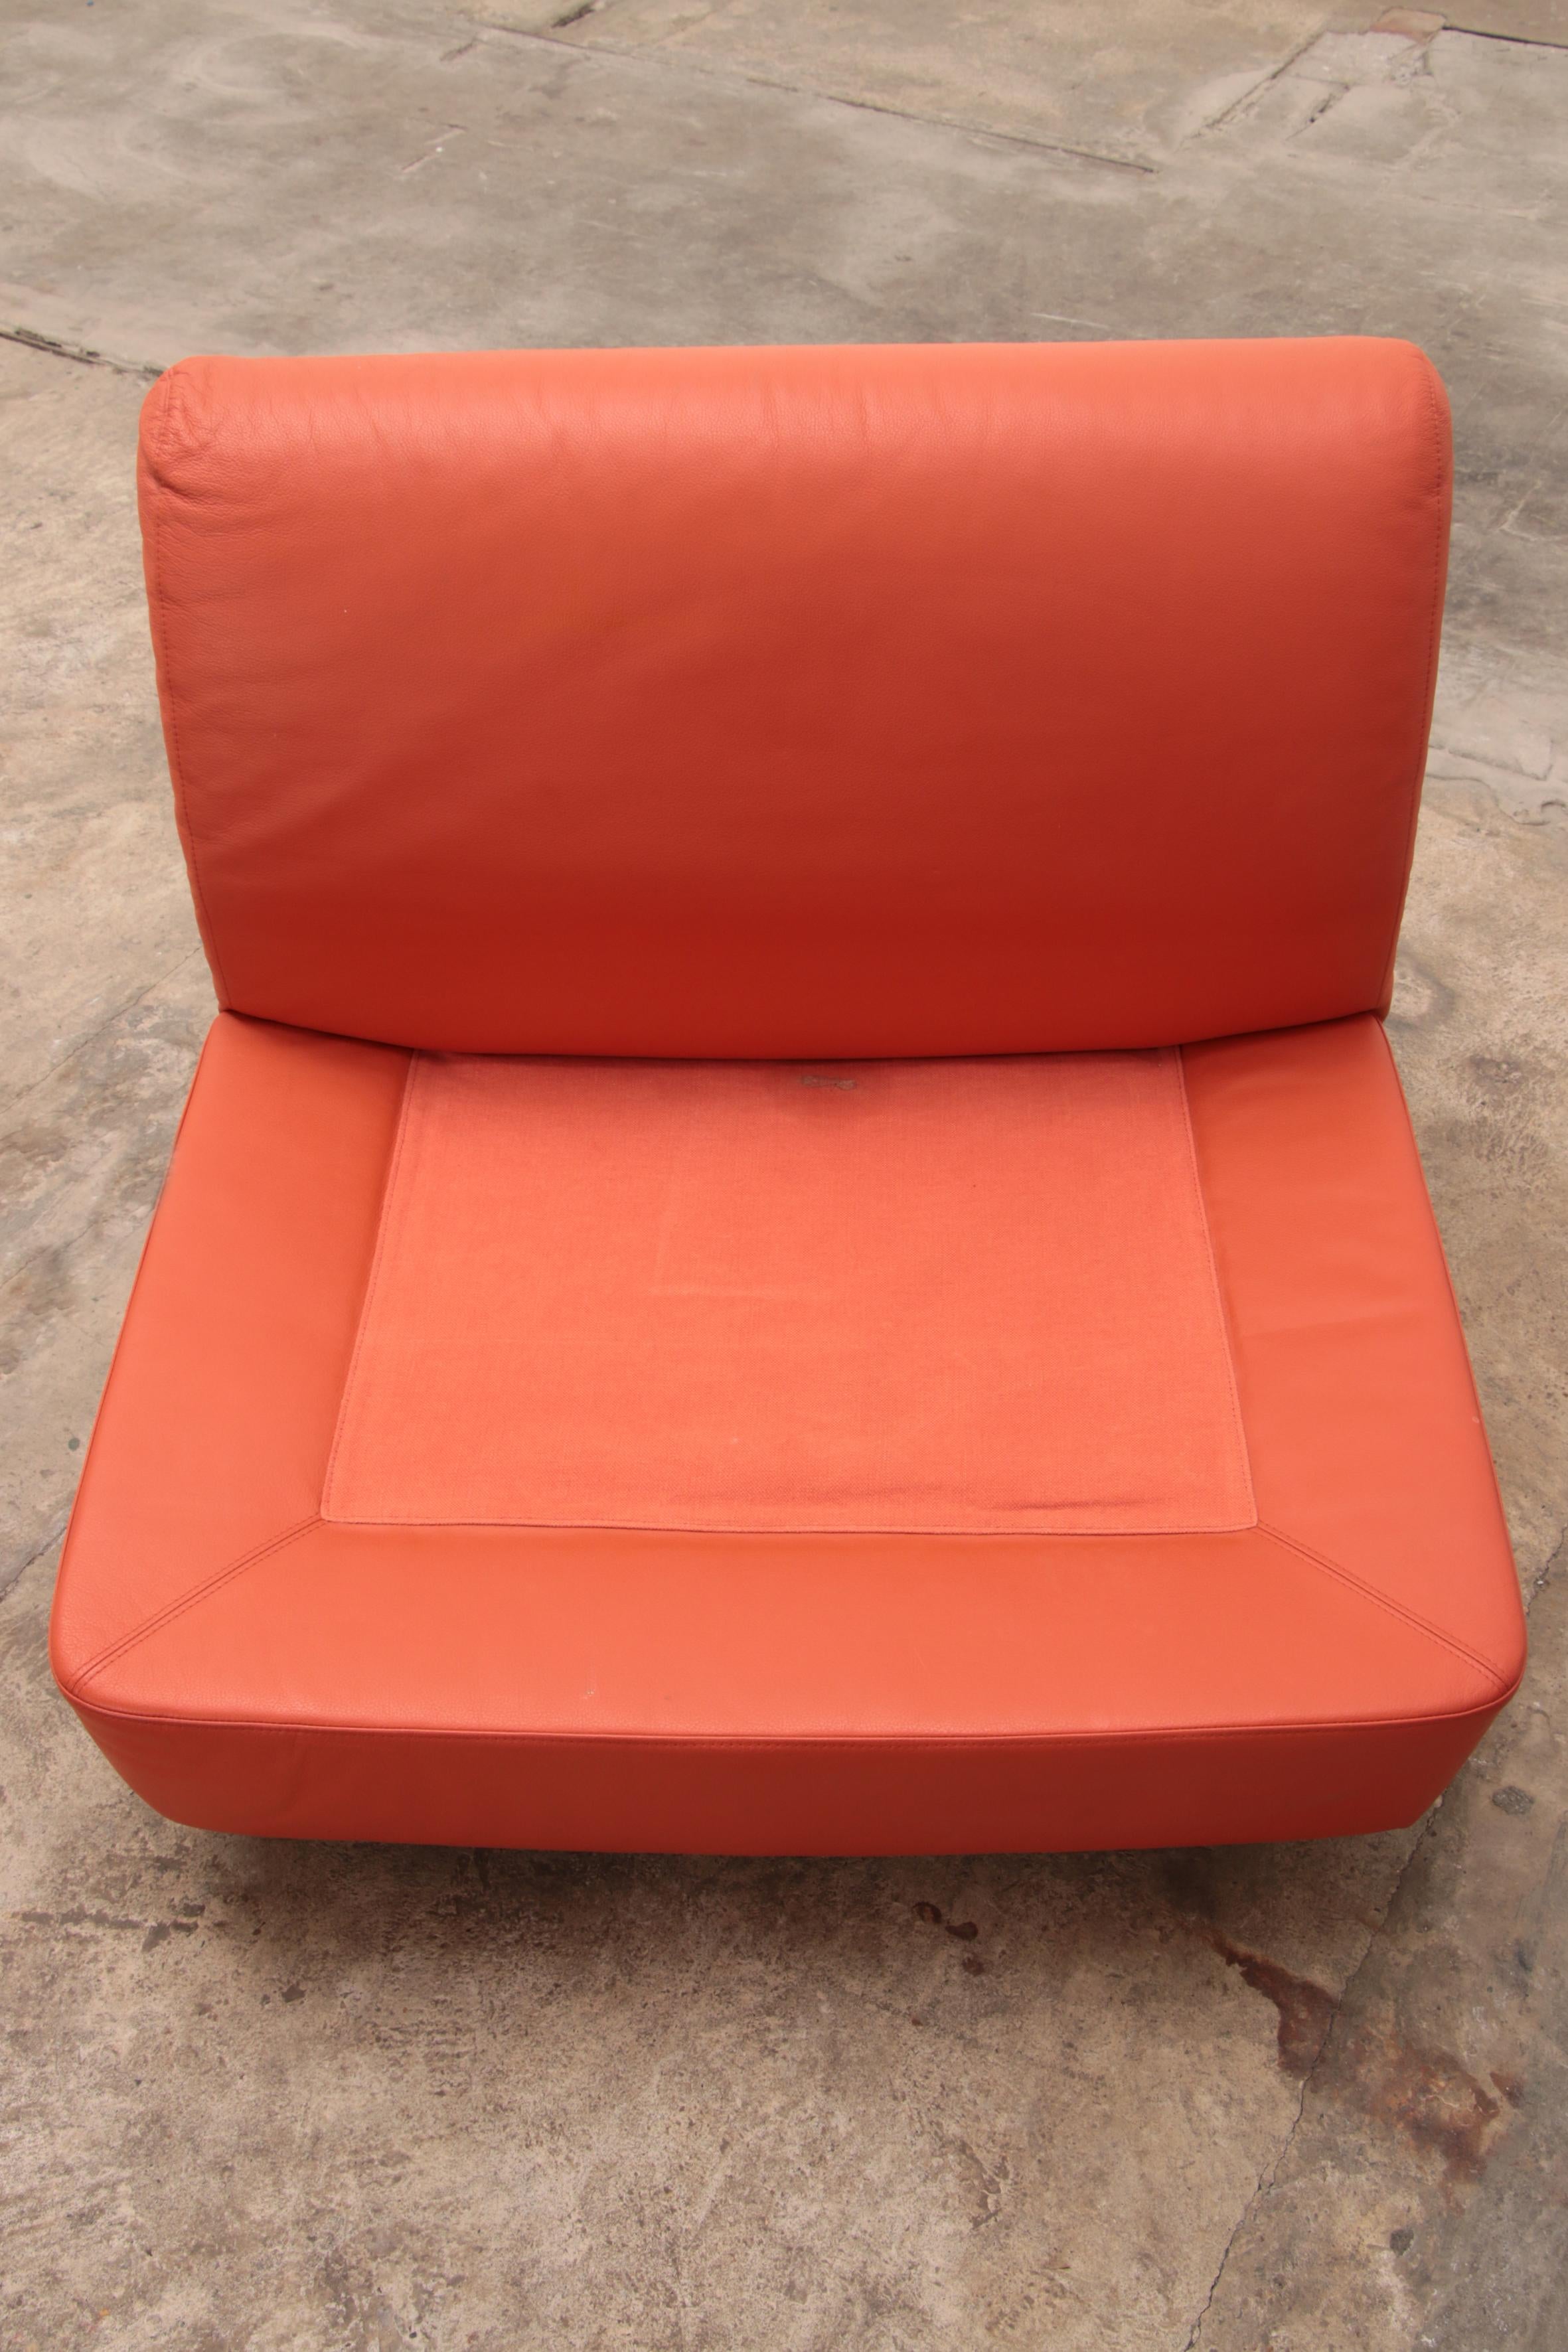 Mario Bellini Amanta Modular Sofa in Orange Leather for C&B Italy, 1960s For Sale 8